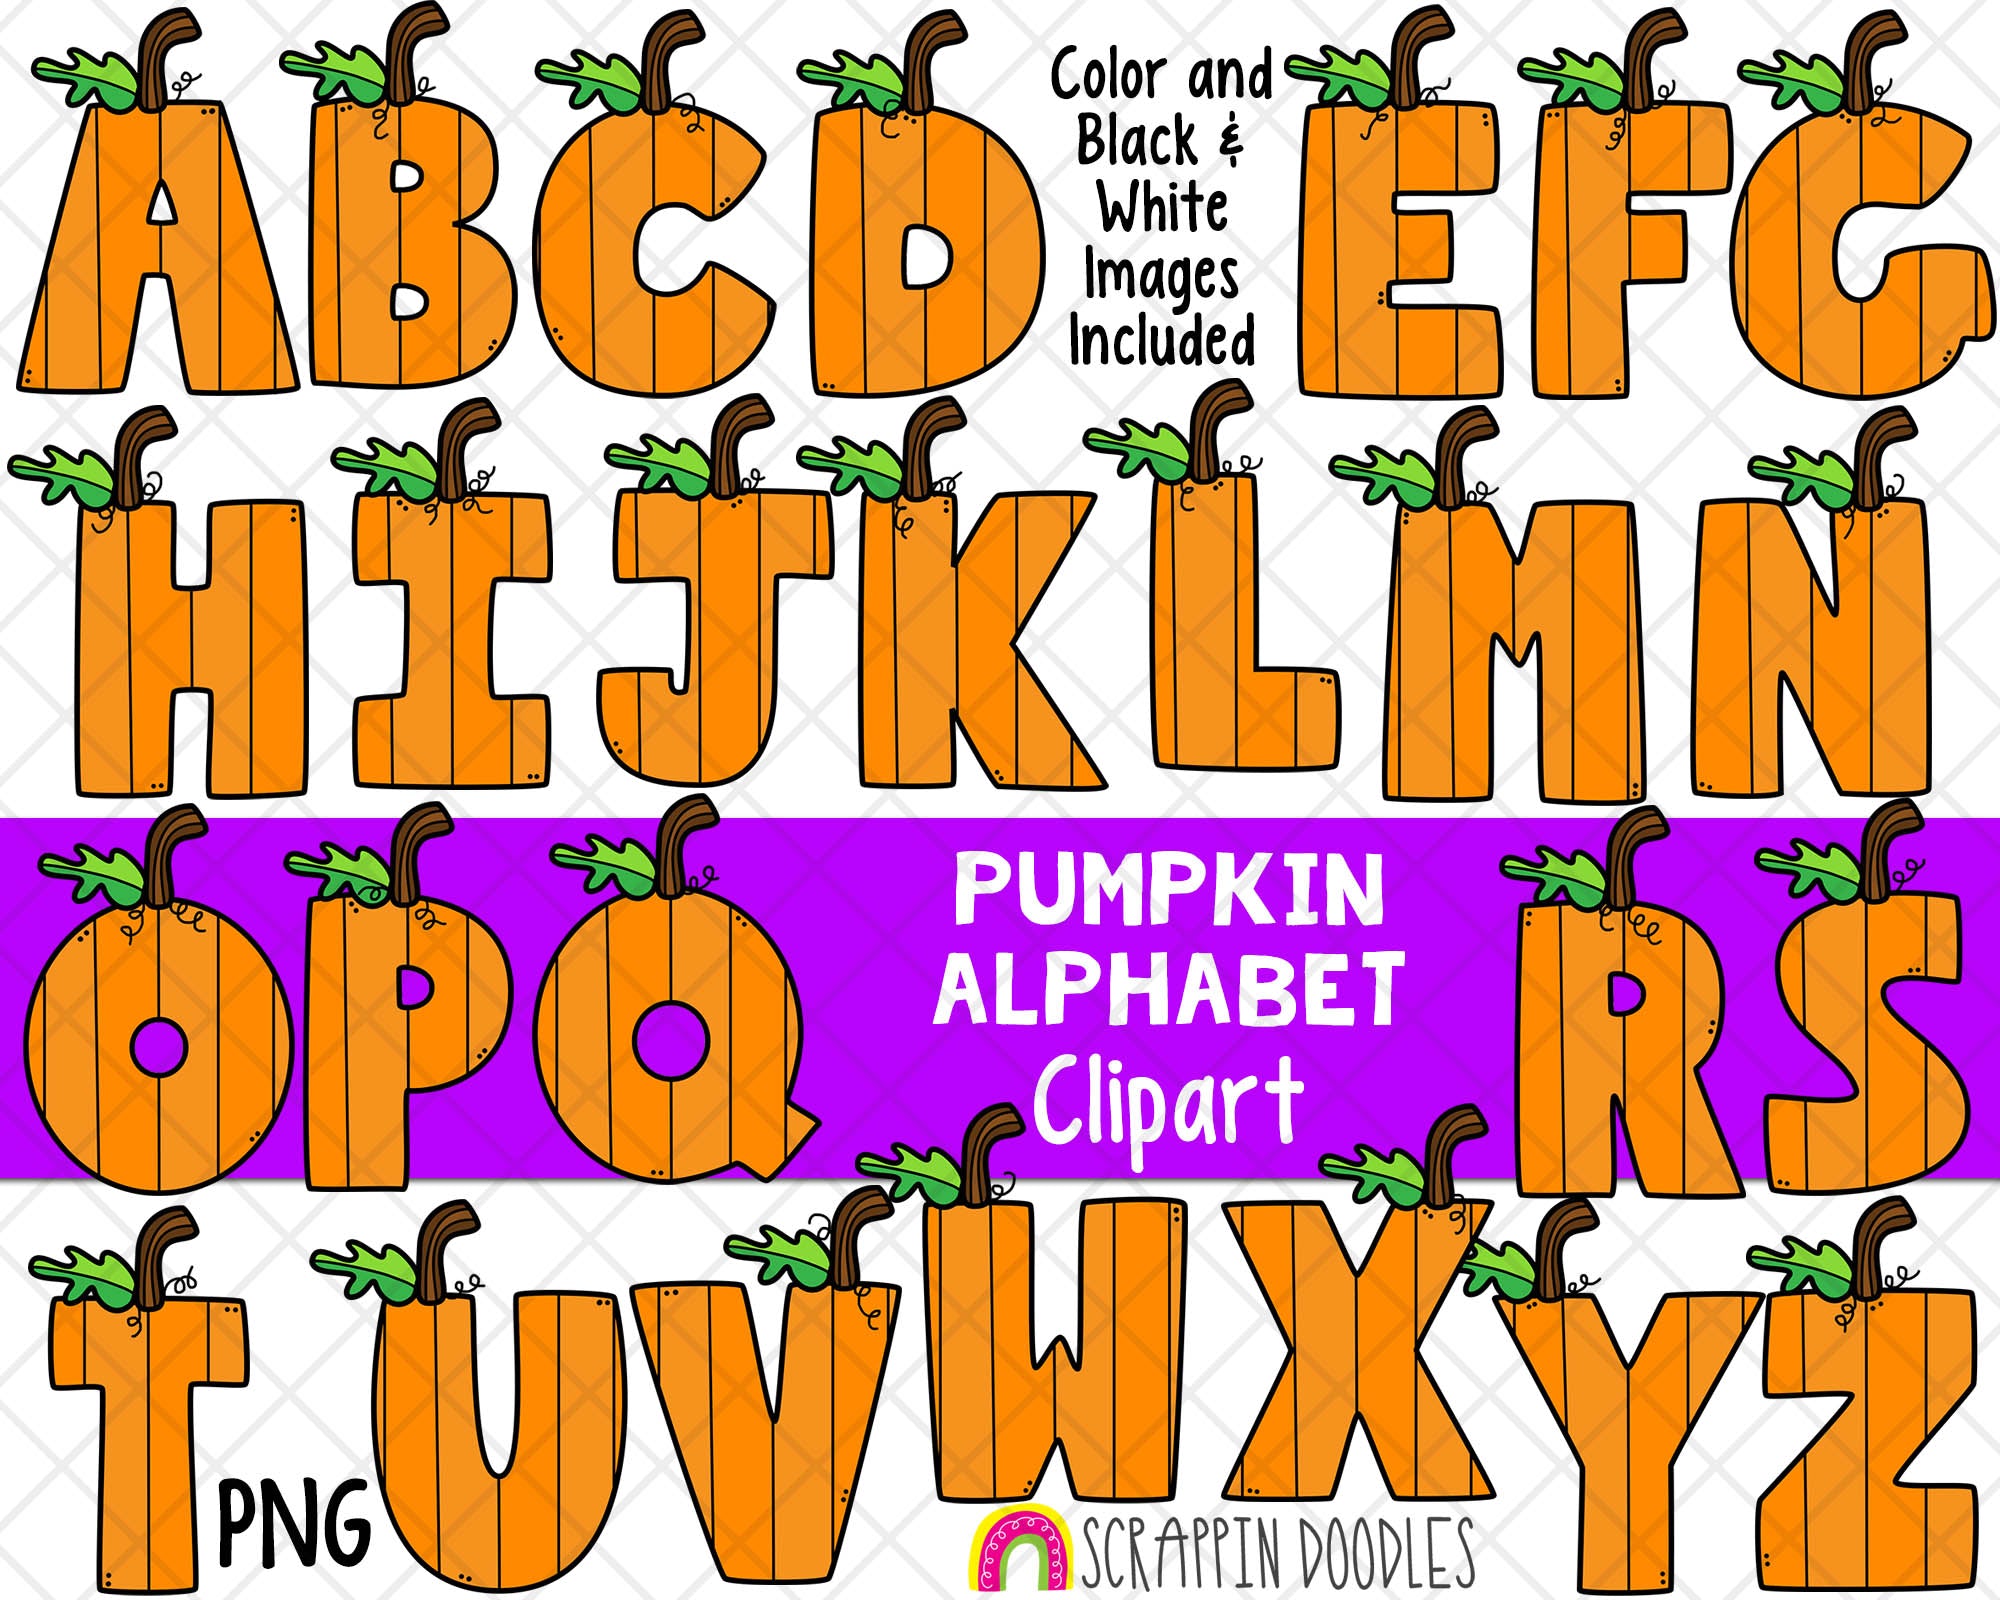 cute alphabet clipart